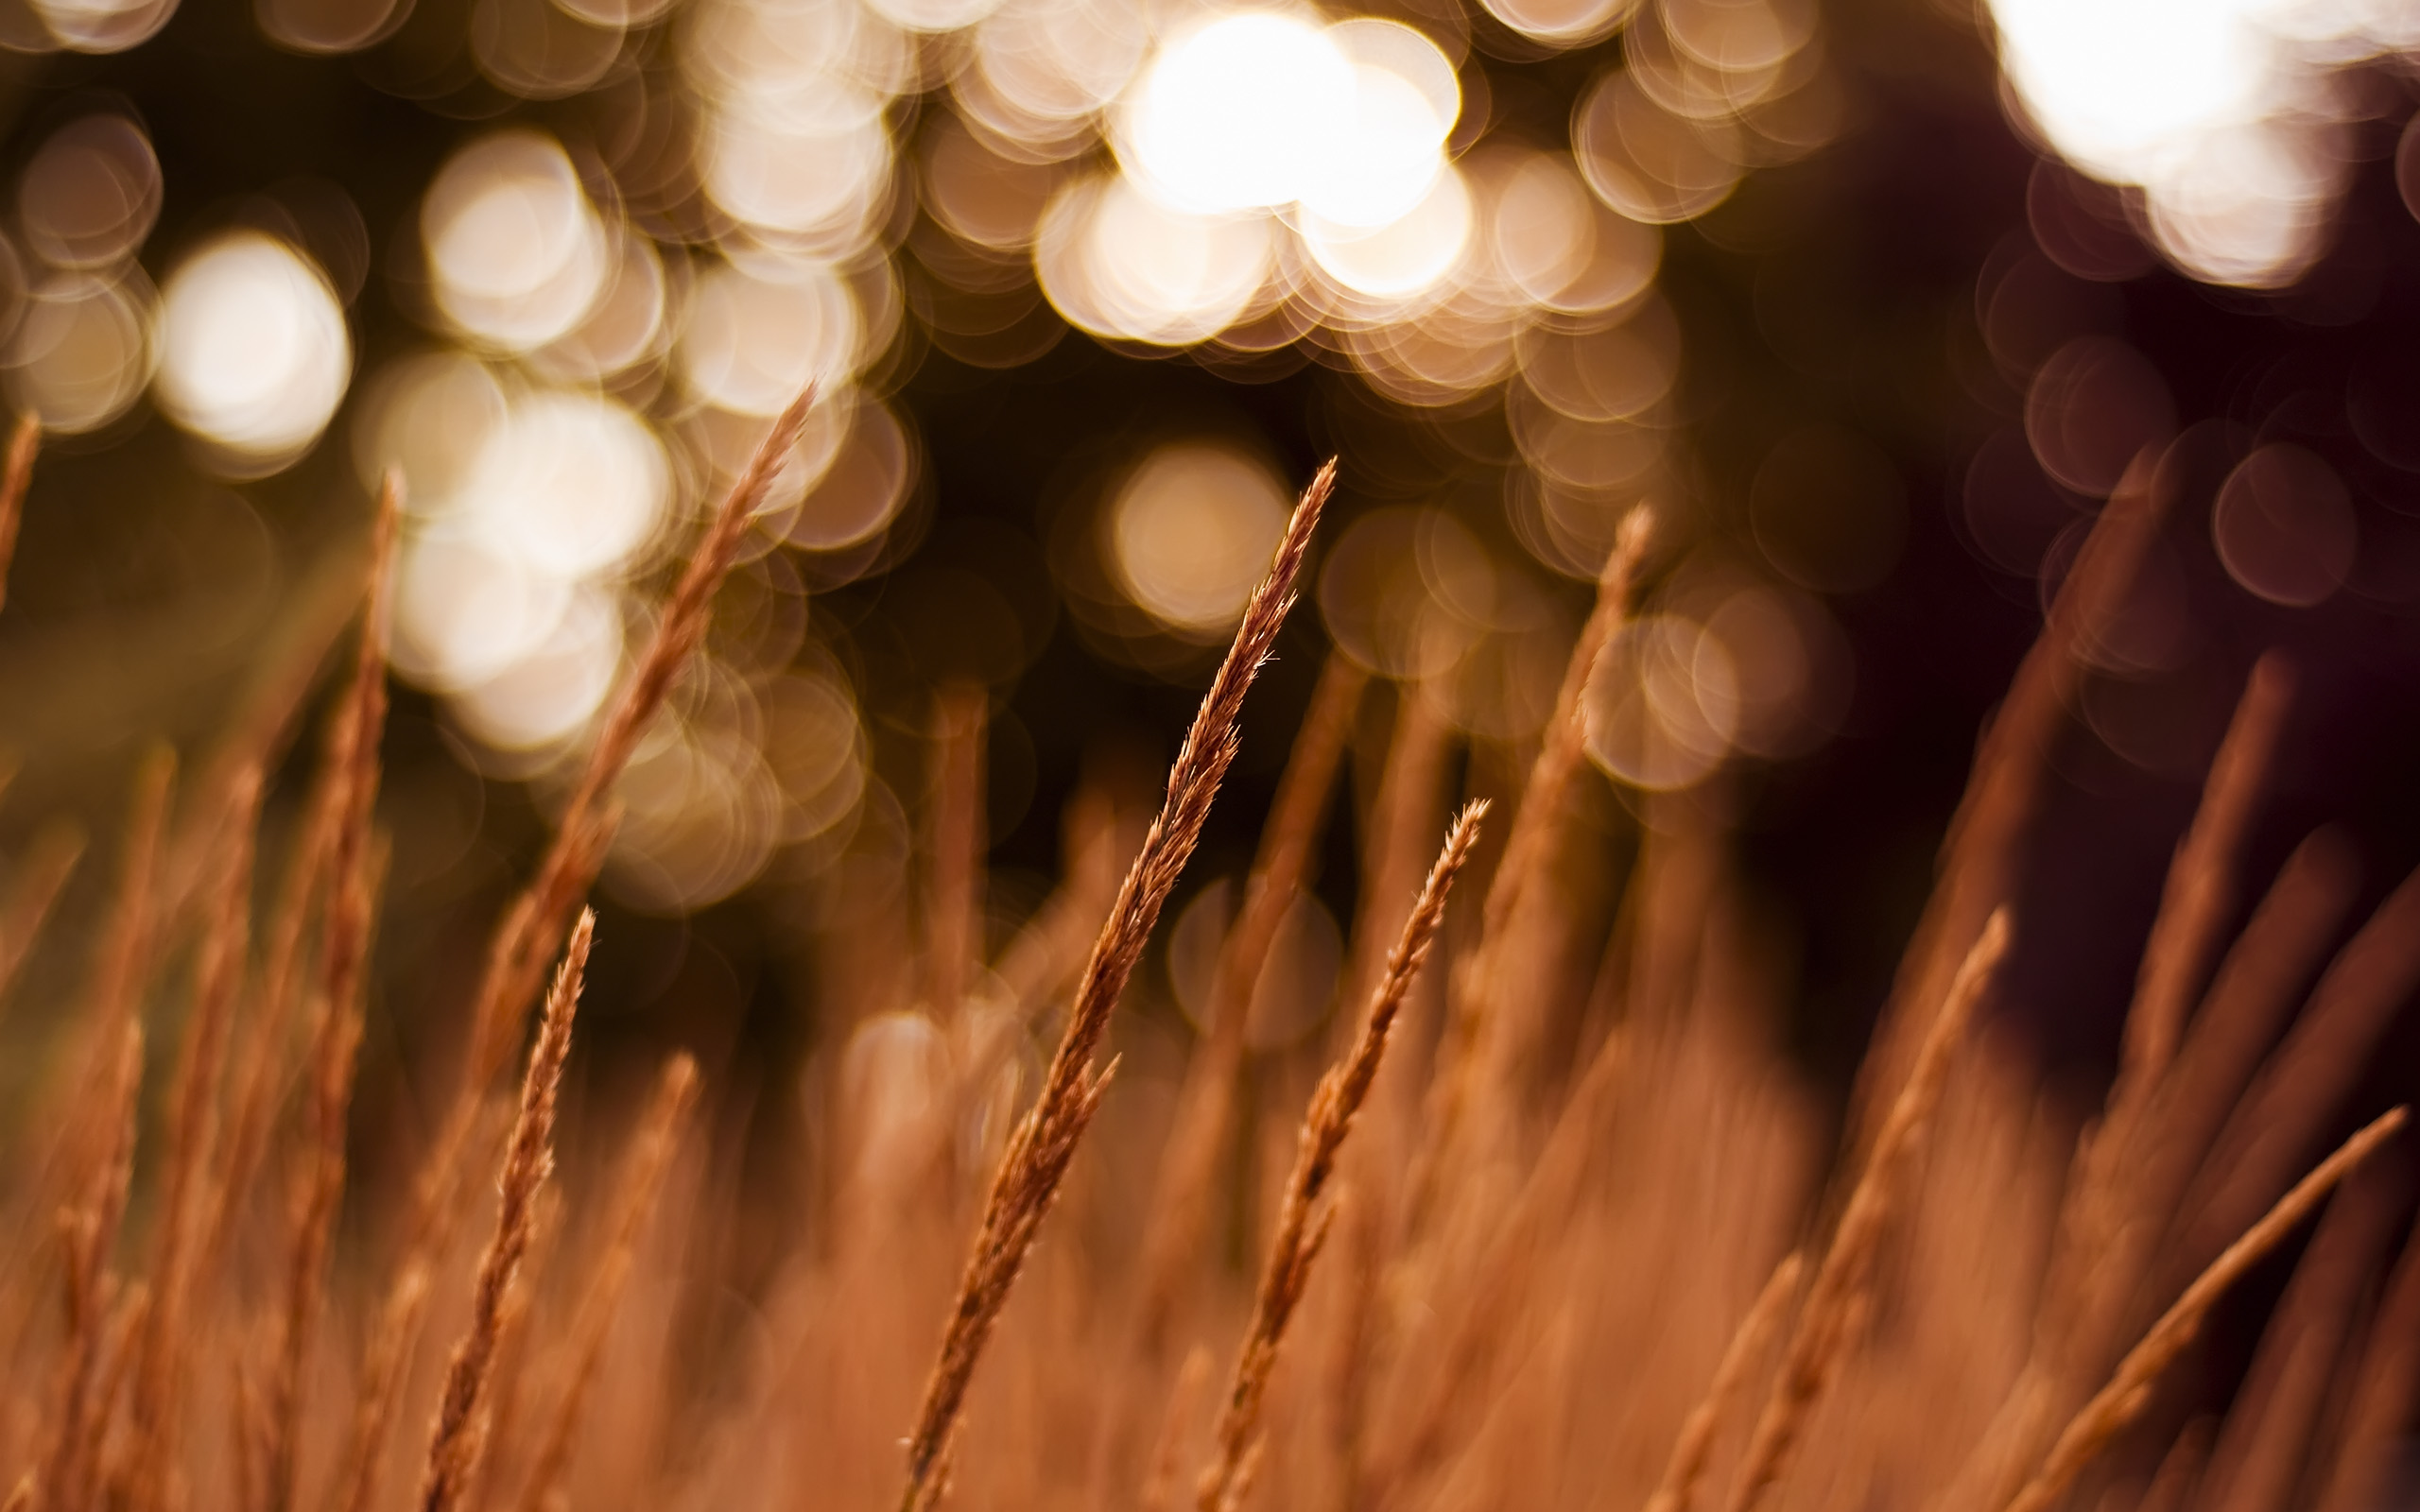 Golden wheat fields, a serene nature scene for hd desktop wallpaper.